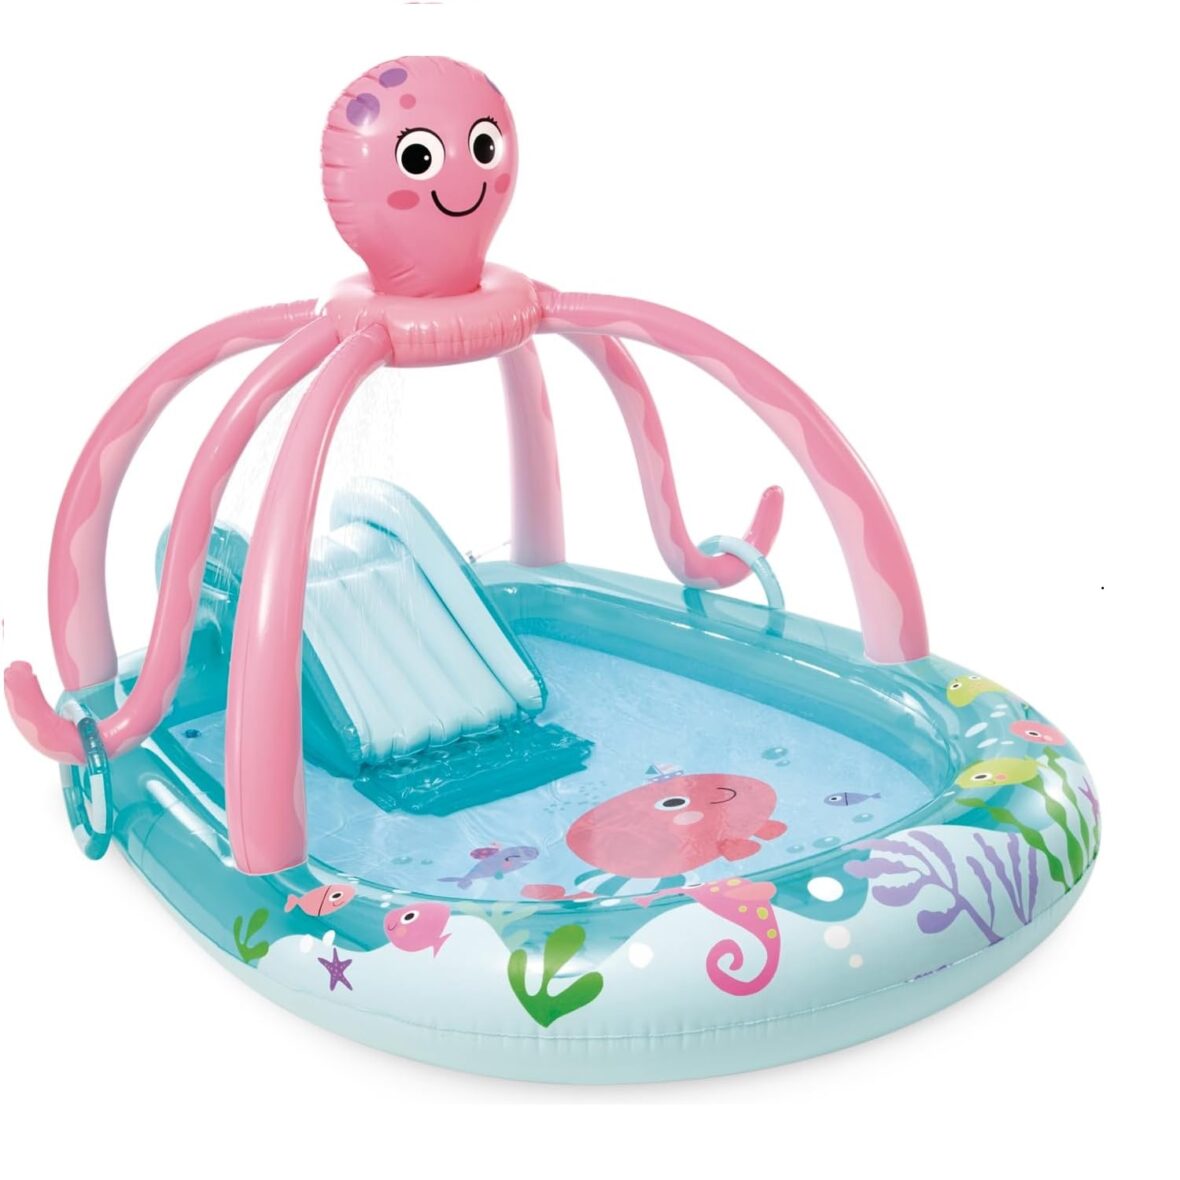 Intex Friendly Octopus Fancy Play Center Pool 92″L x 72″W x 59″H-56138